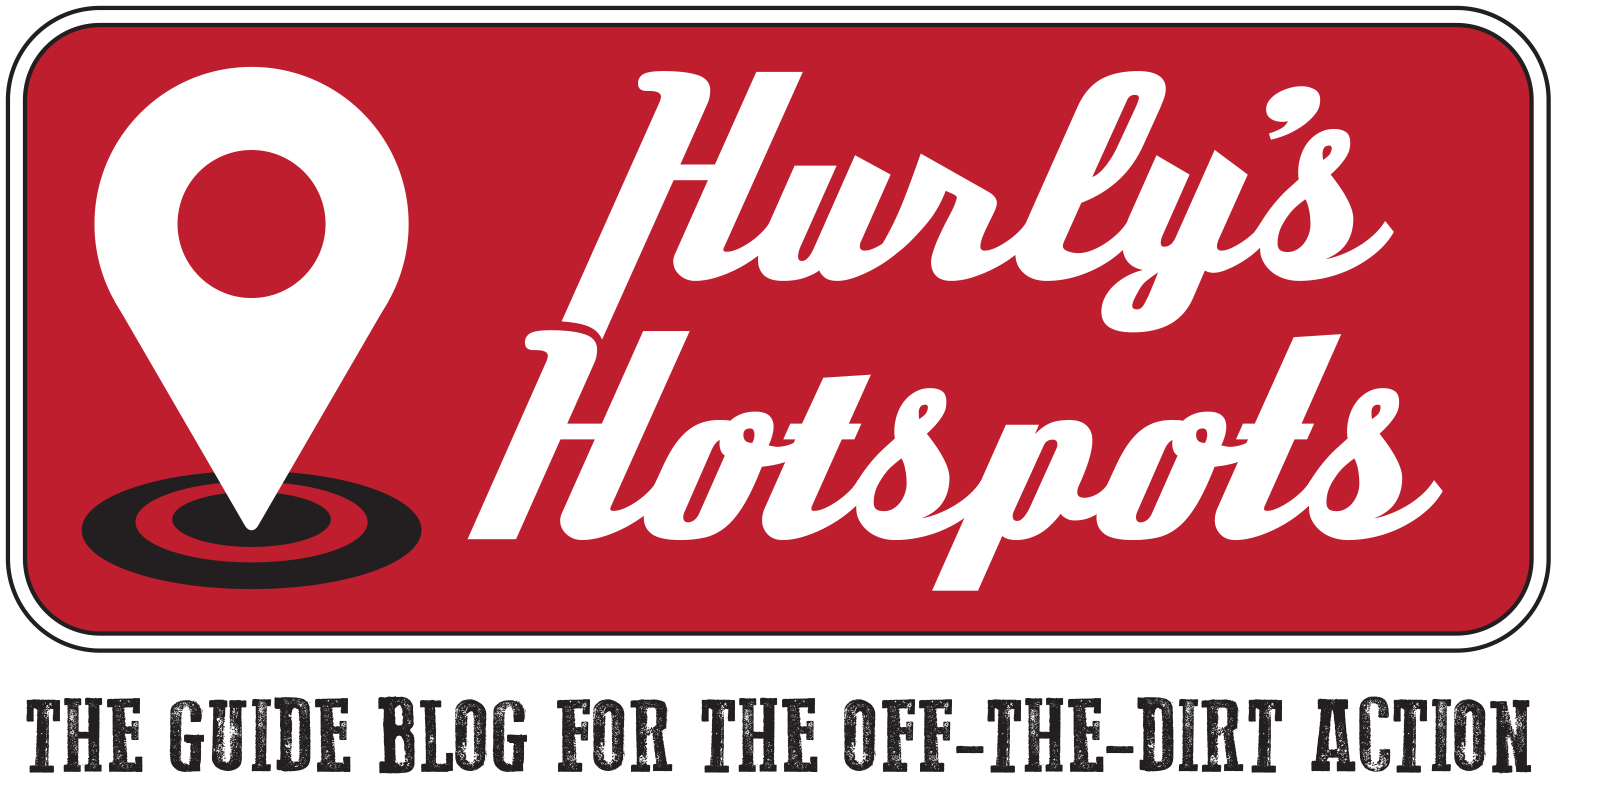 Hurley's Hotspots